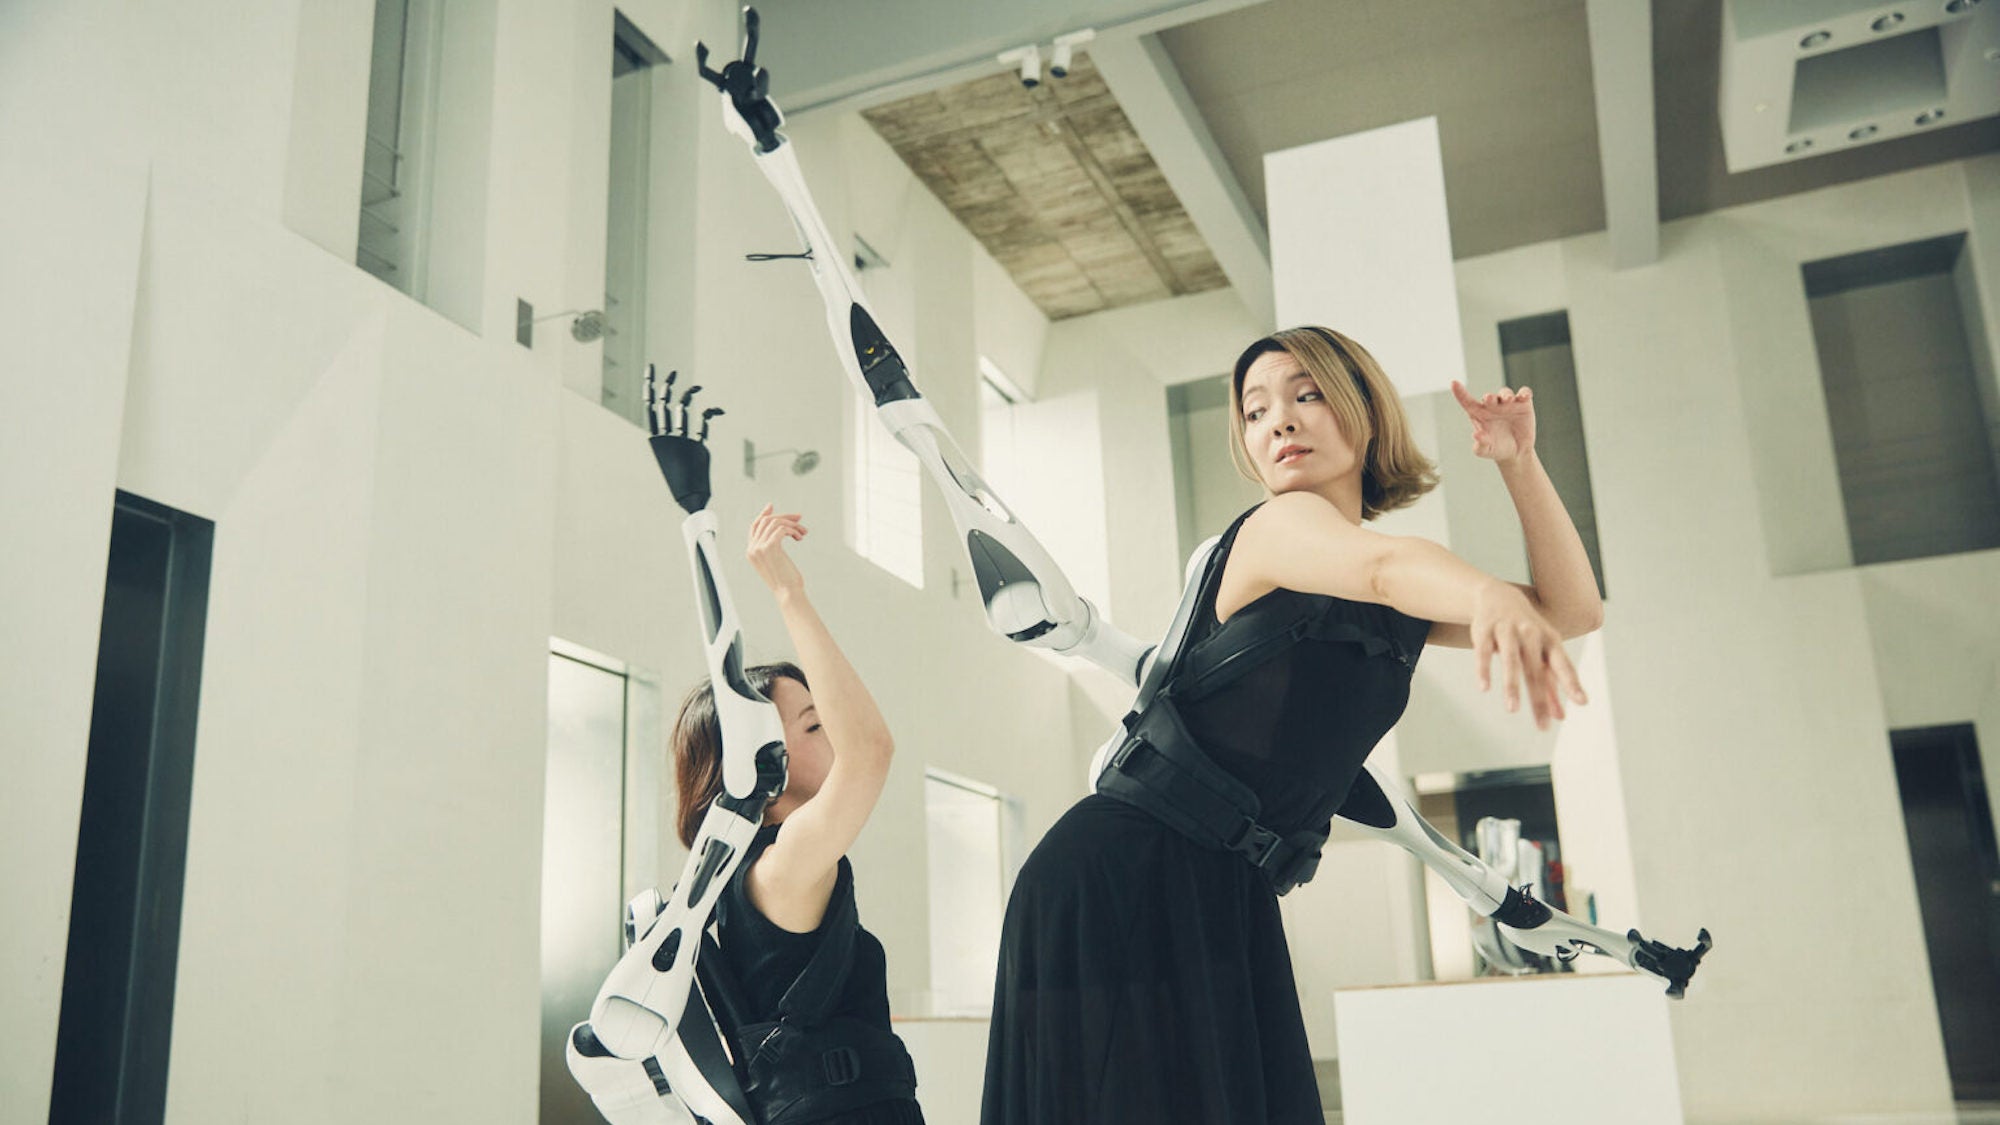 Brazos robóticos convierten a bailarines en arañas cyborg